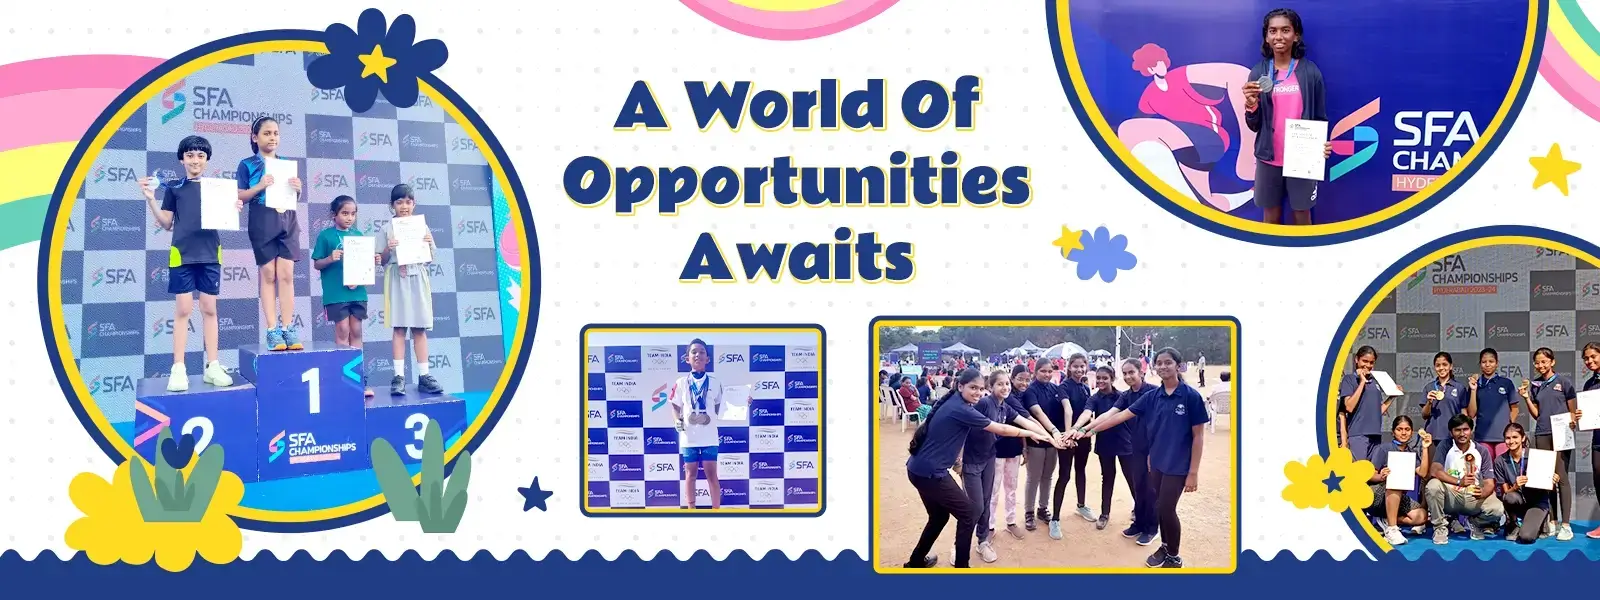 A World of Opportunities Awaits - CGR International School - Best School in Madhapur / Hyderabad